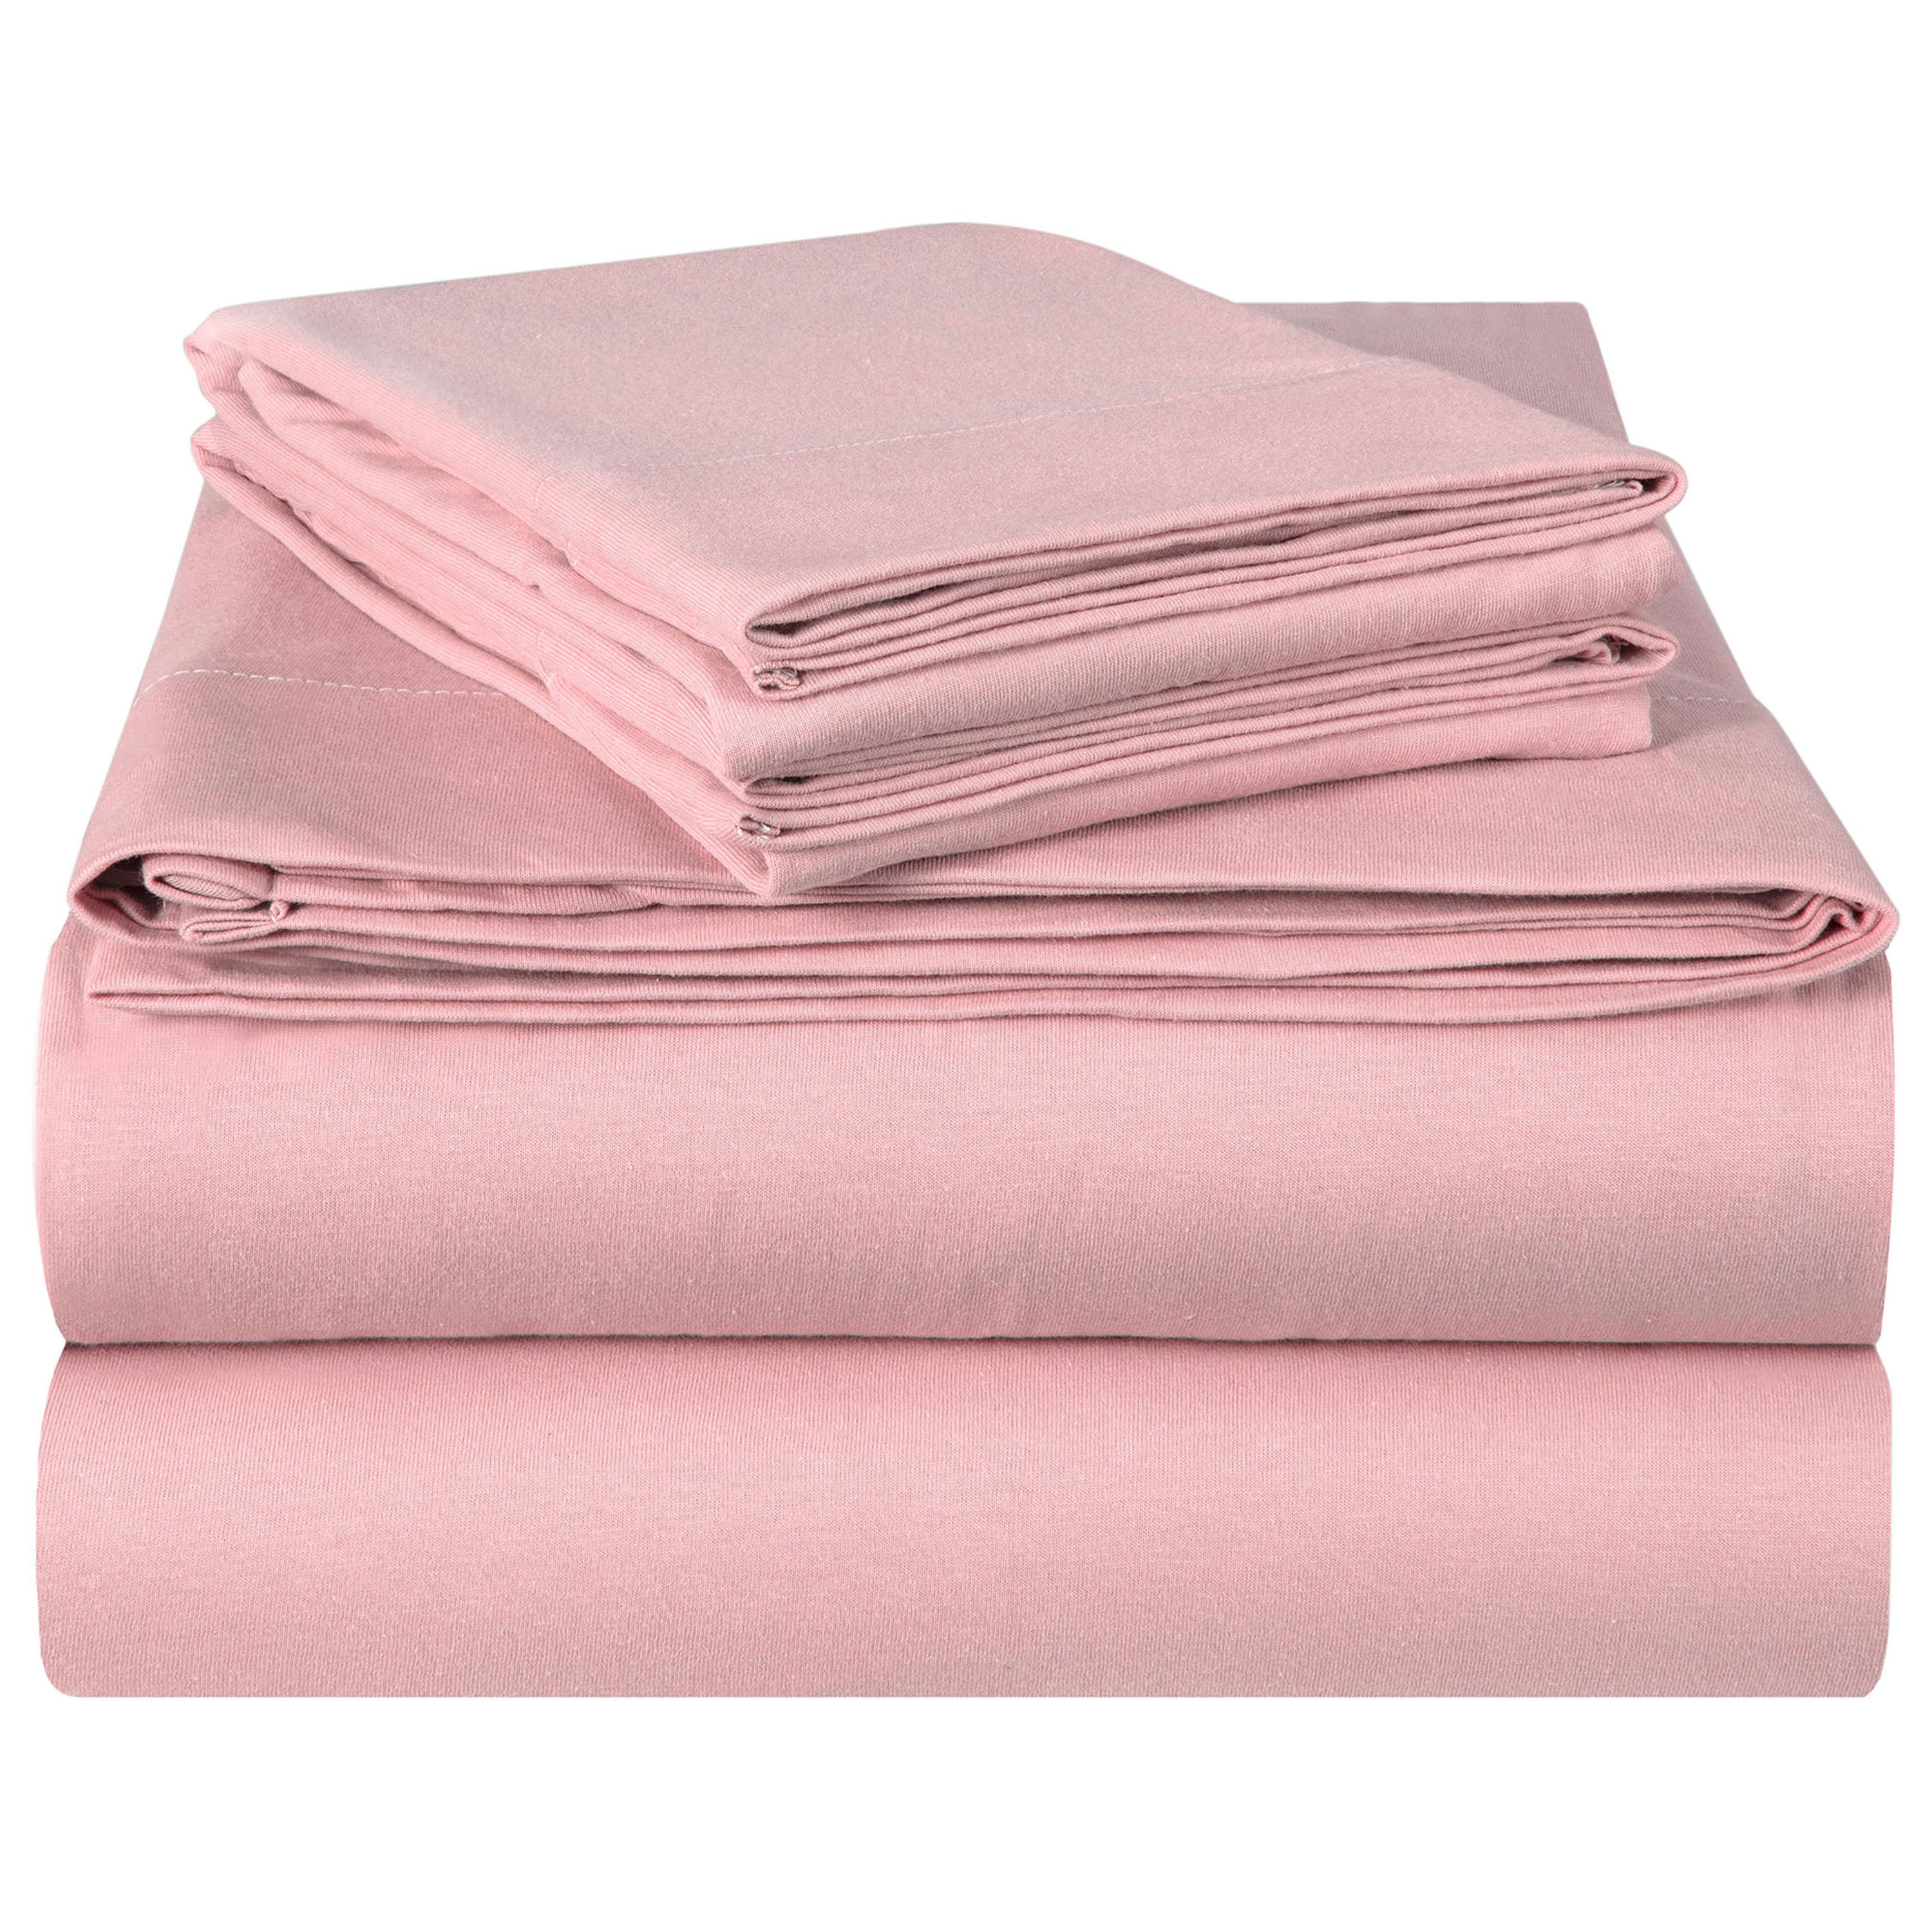 Enviohome Quality Knit 100 Cotton Jersey Bed Sheet Set Full Light 